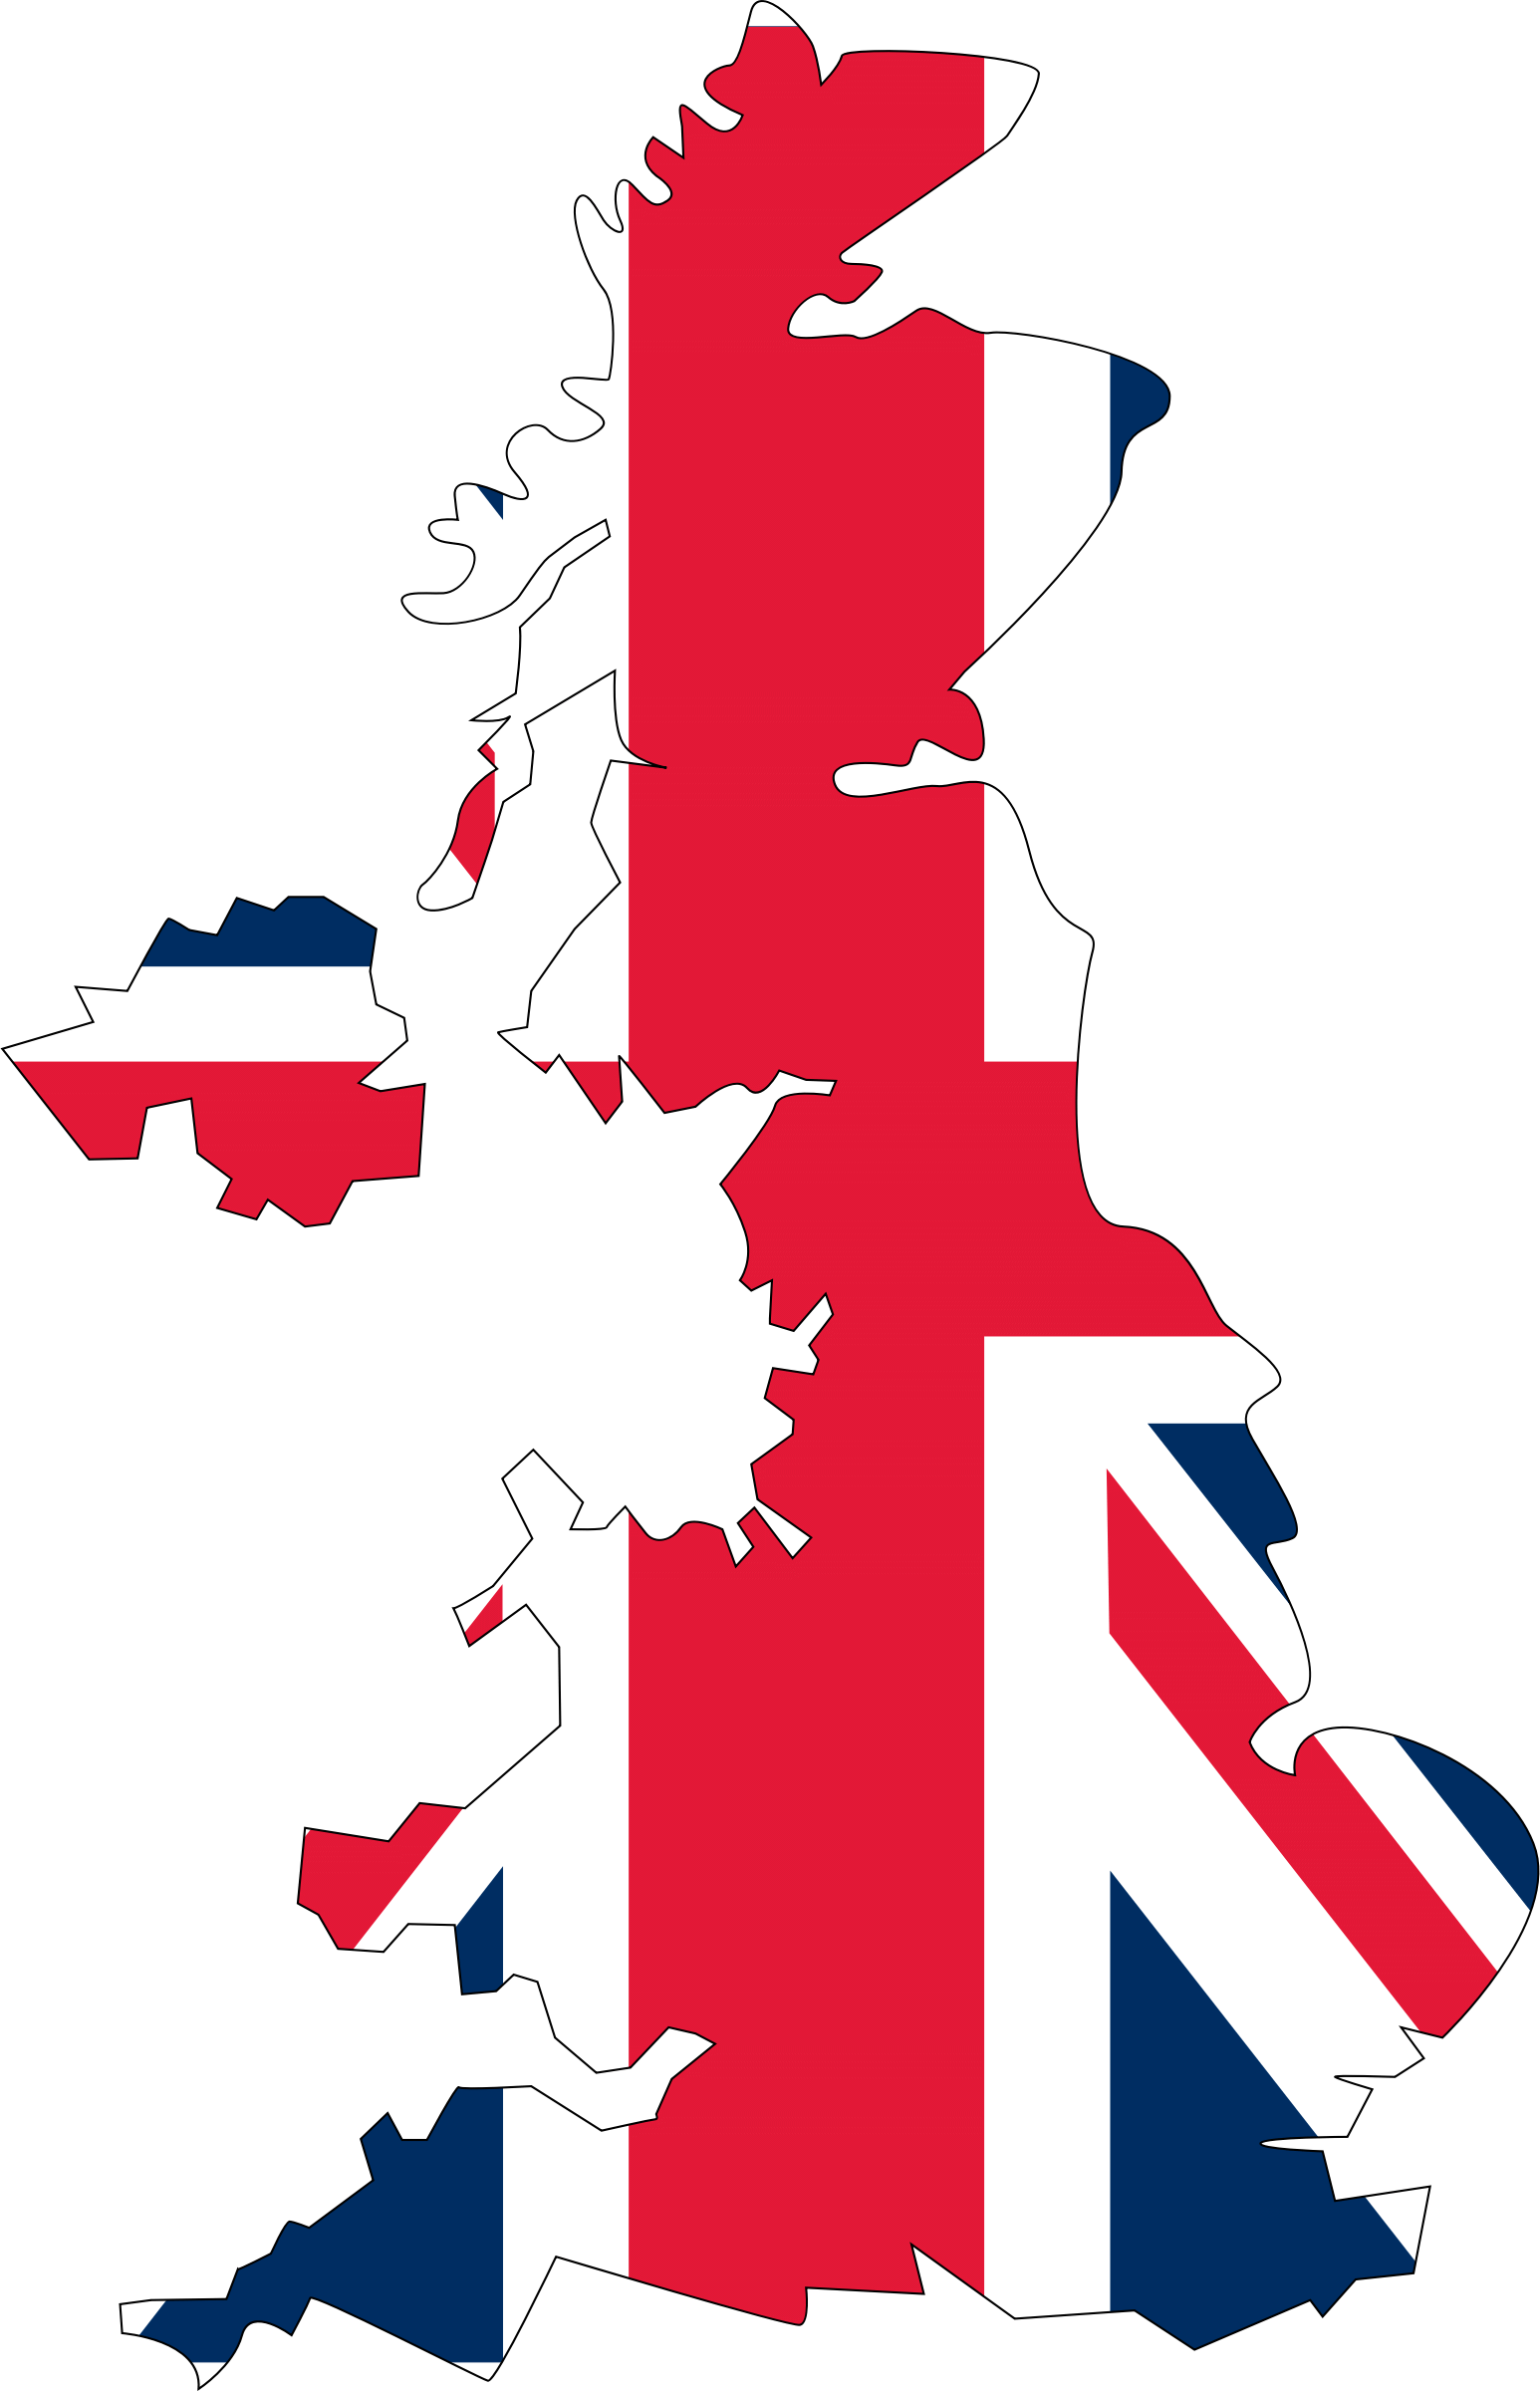 Uk territory. Контур Великобритании. Флаг Великобритании. Очертания Британии. Карта Великобритании без фона.